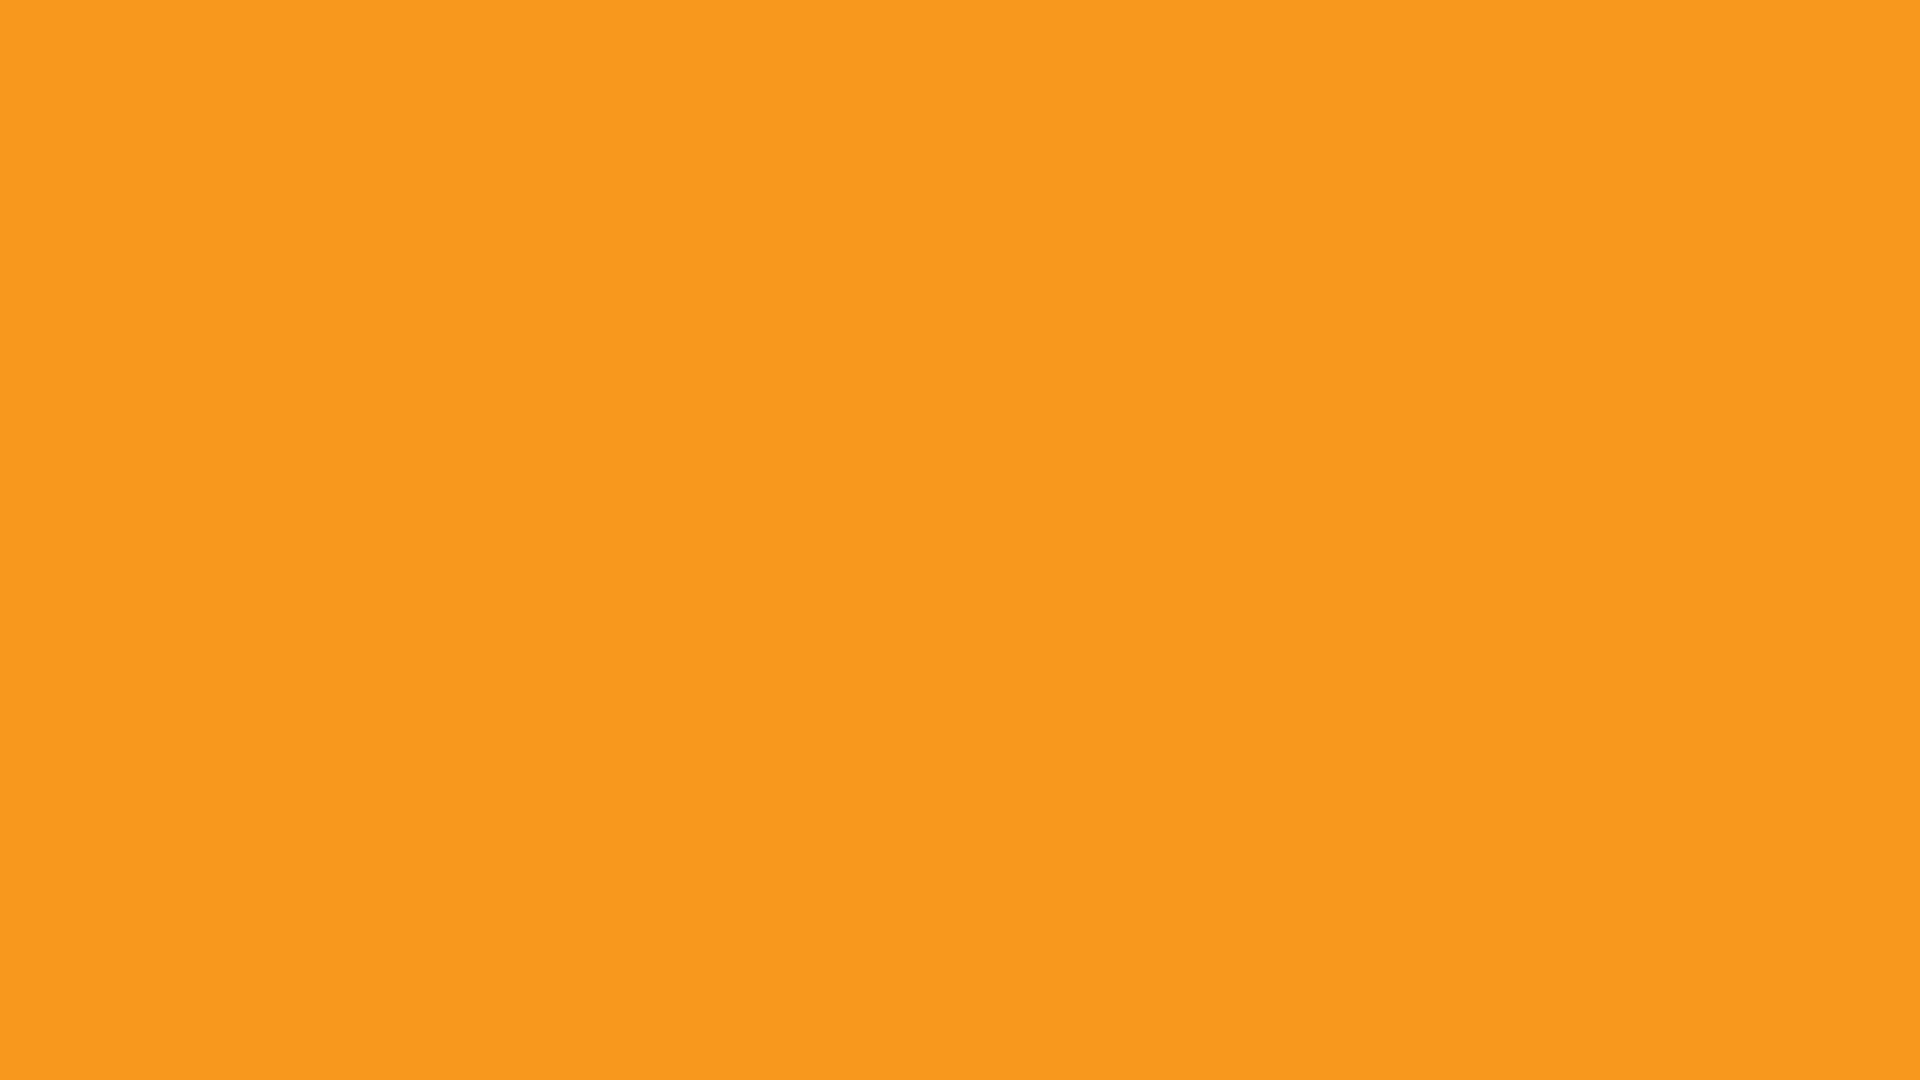 Orange Aesthetic Desktop Wallpapers Top Free Orange Aesthetic Desktop Backgrounds Wallpaperaccess Tons of awesome orange aesthetic laptop wallpapers to download for free. orange aesthetic desktop wallpapers